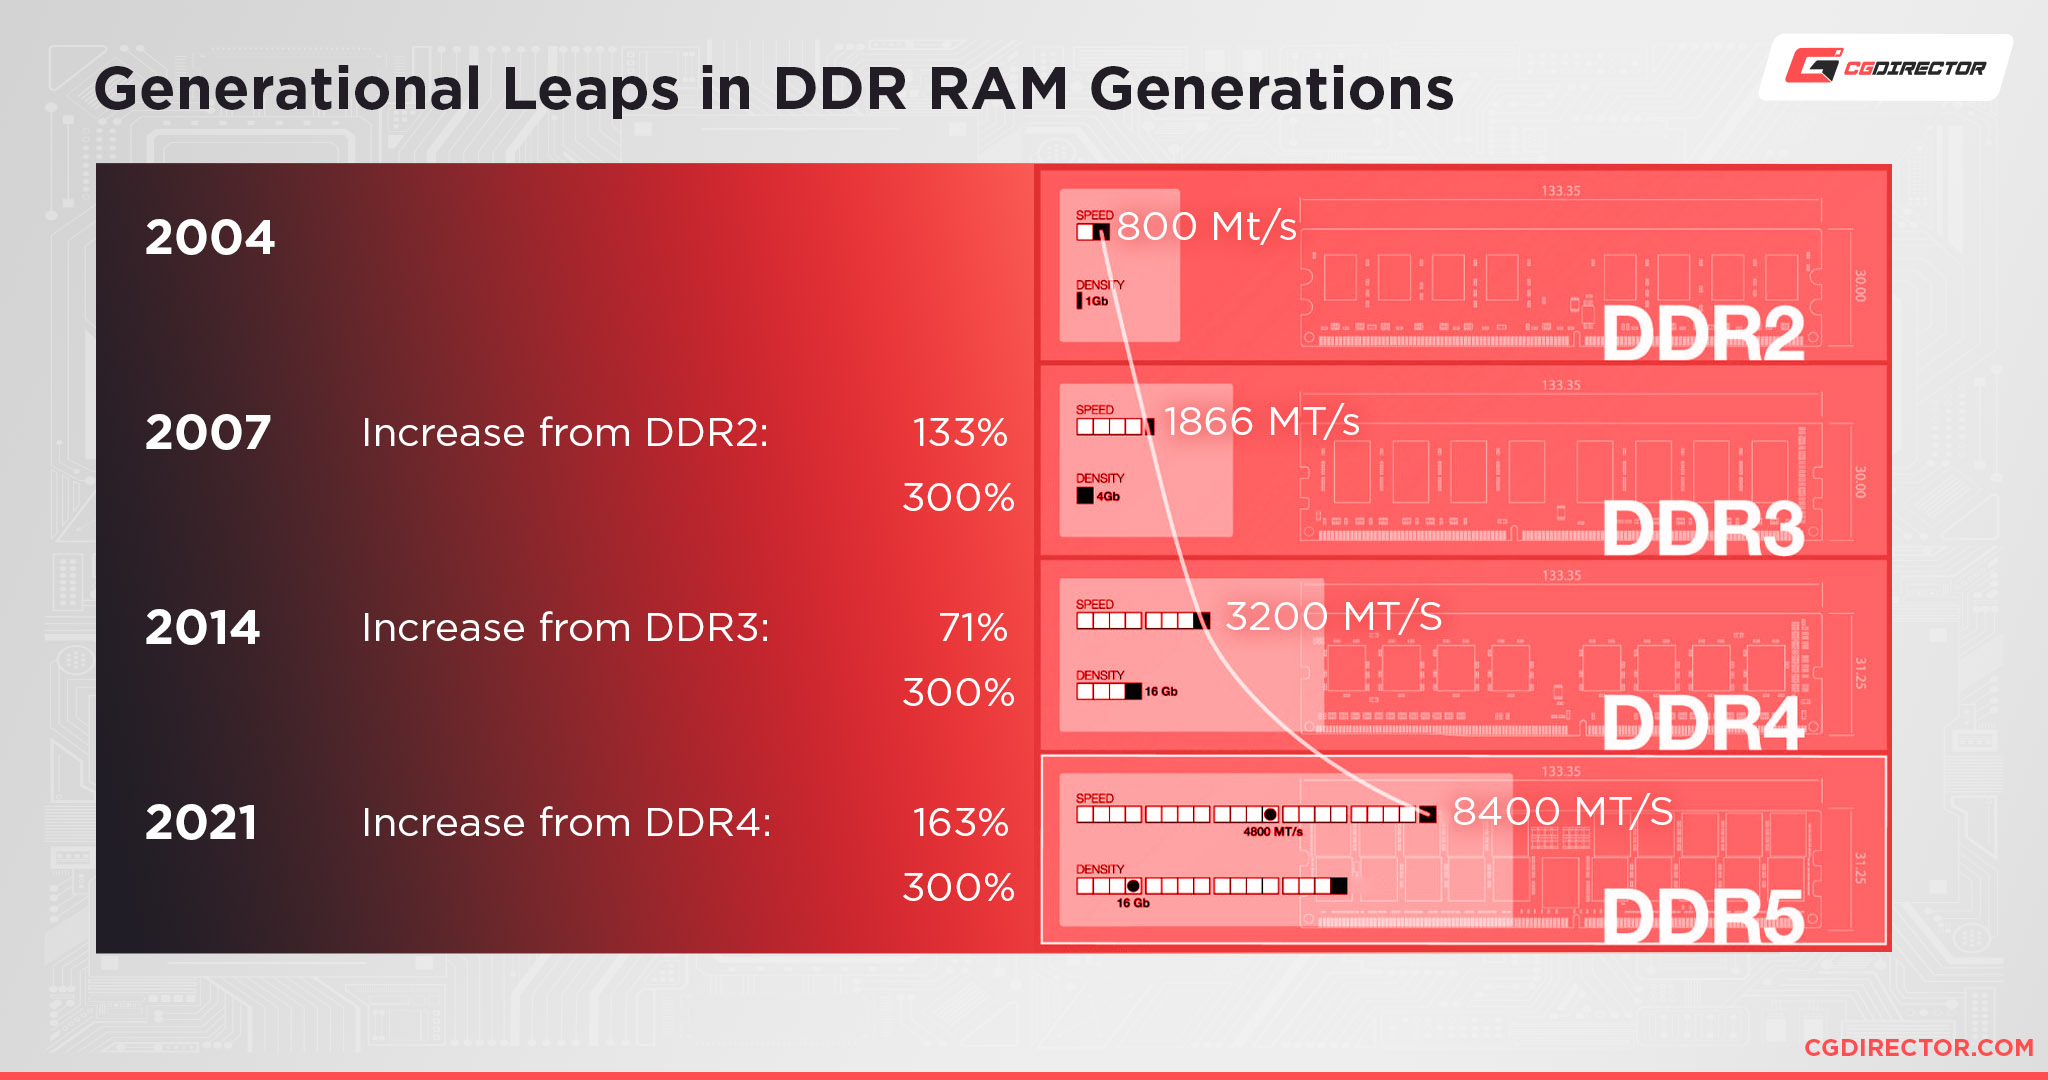 Generational Leaps in DDR RAM Generations